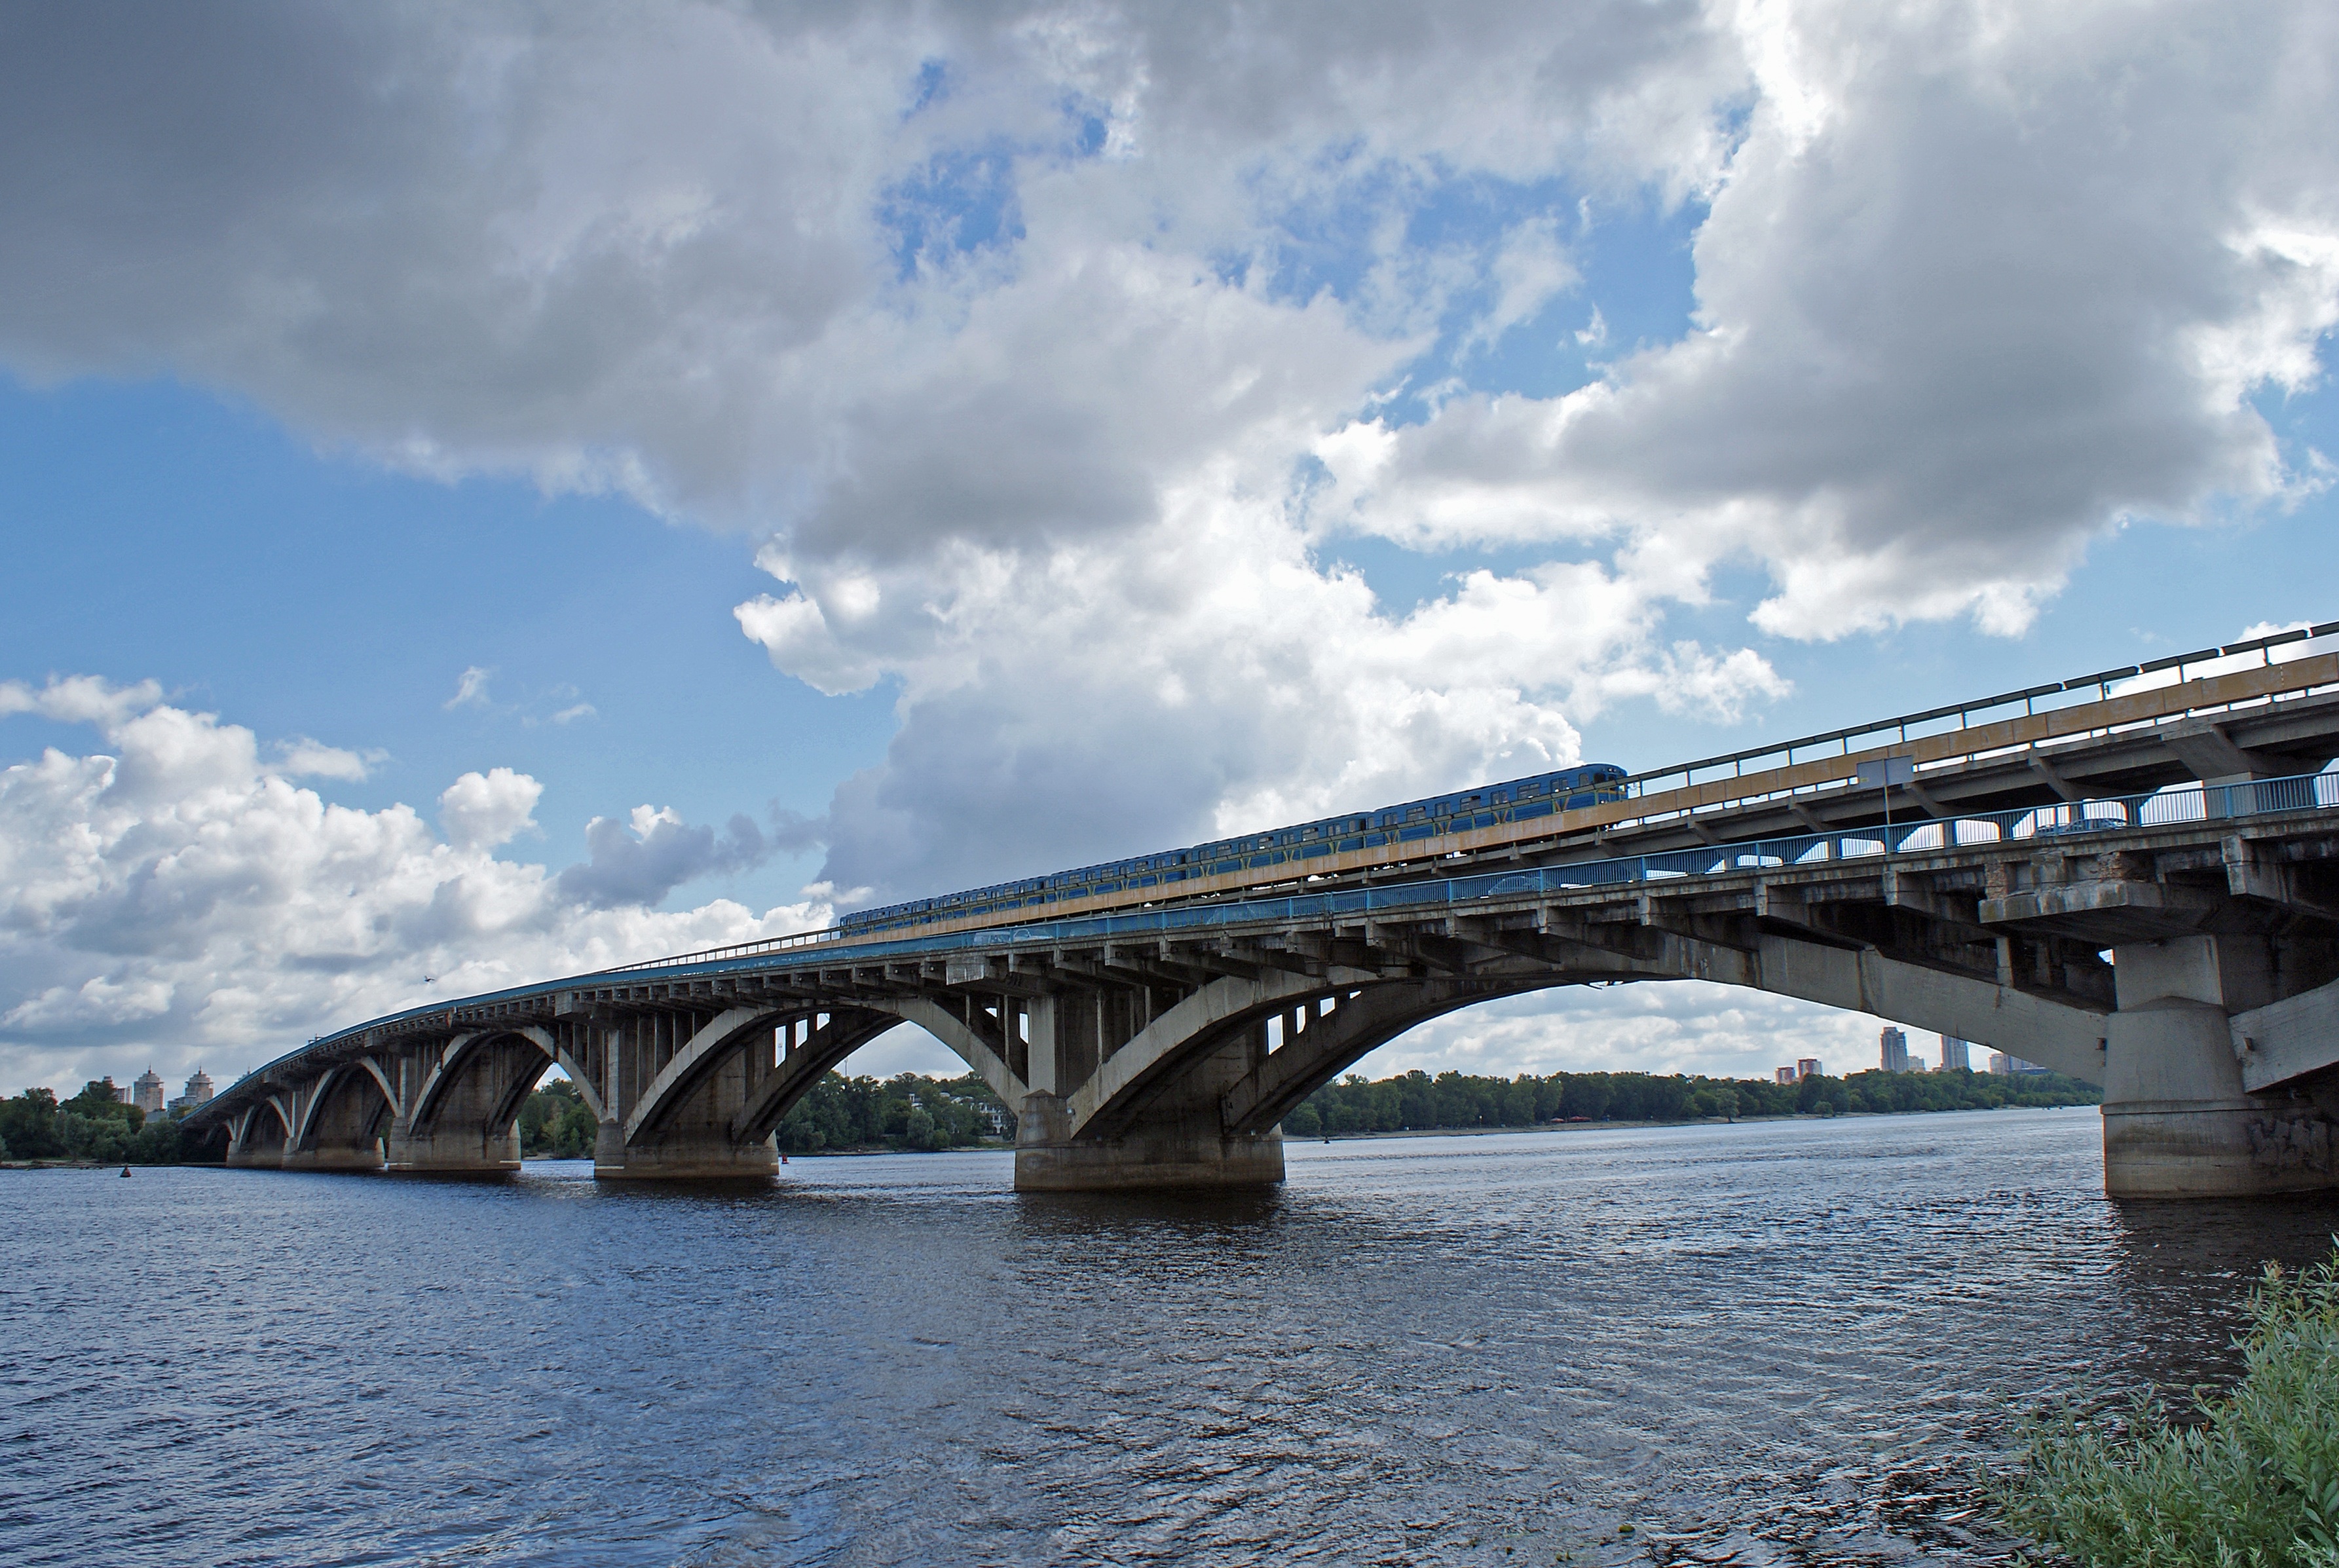 ukraine, kiev, kyiv, dnieper, metro bridge, connection, bridge - man made structure